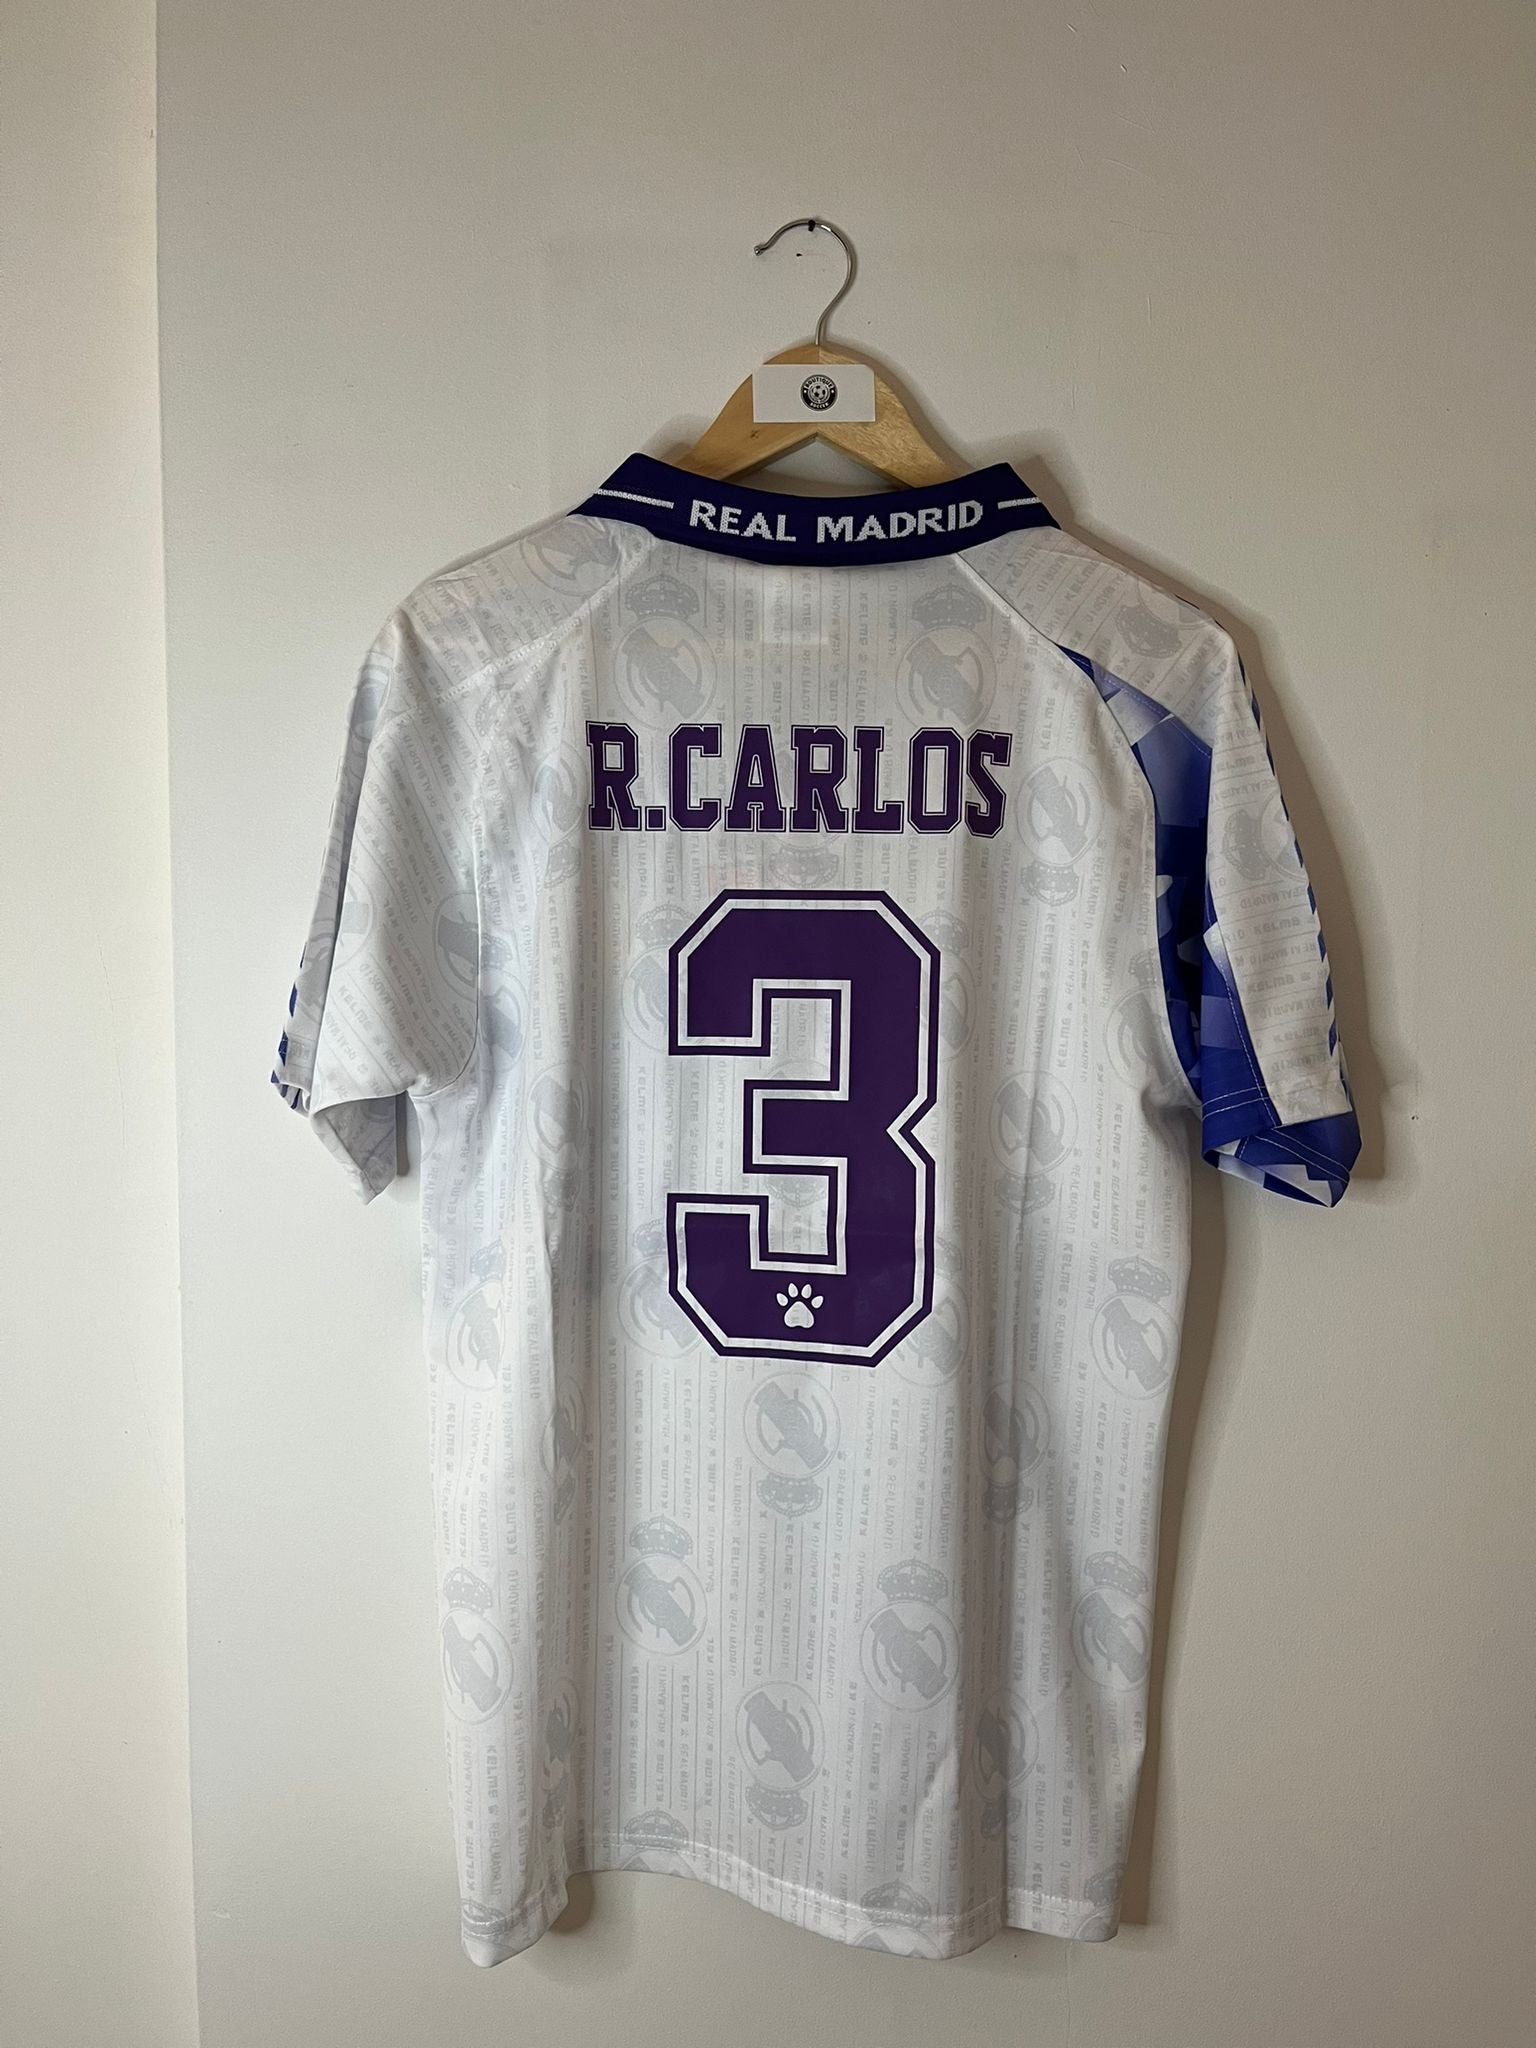 Roberto Carlos kit